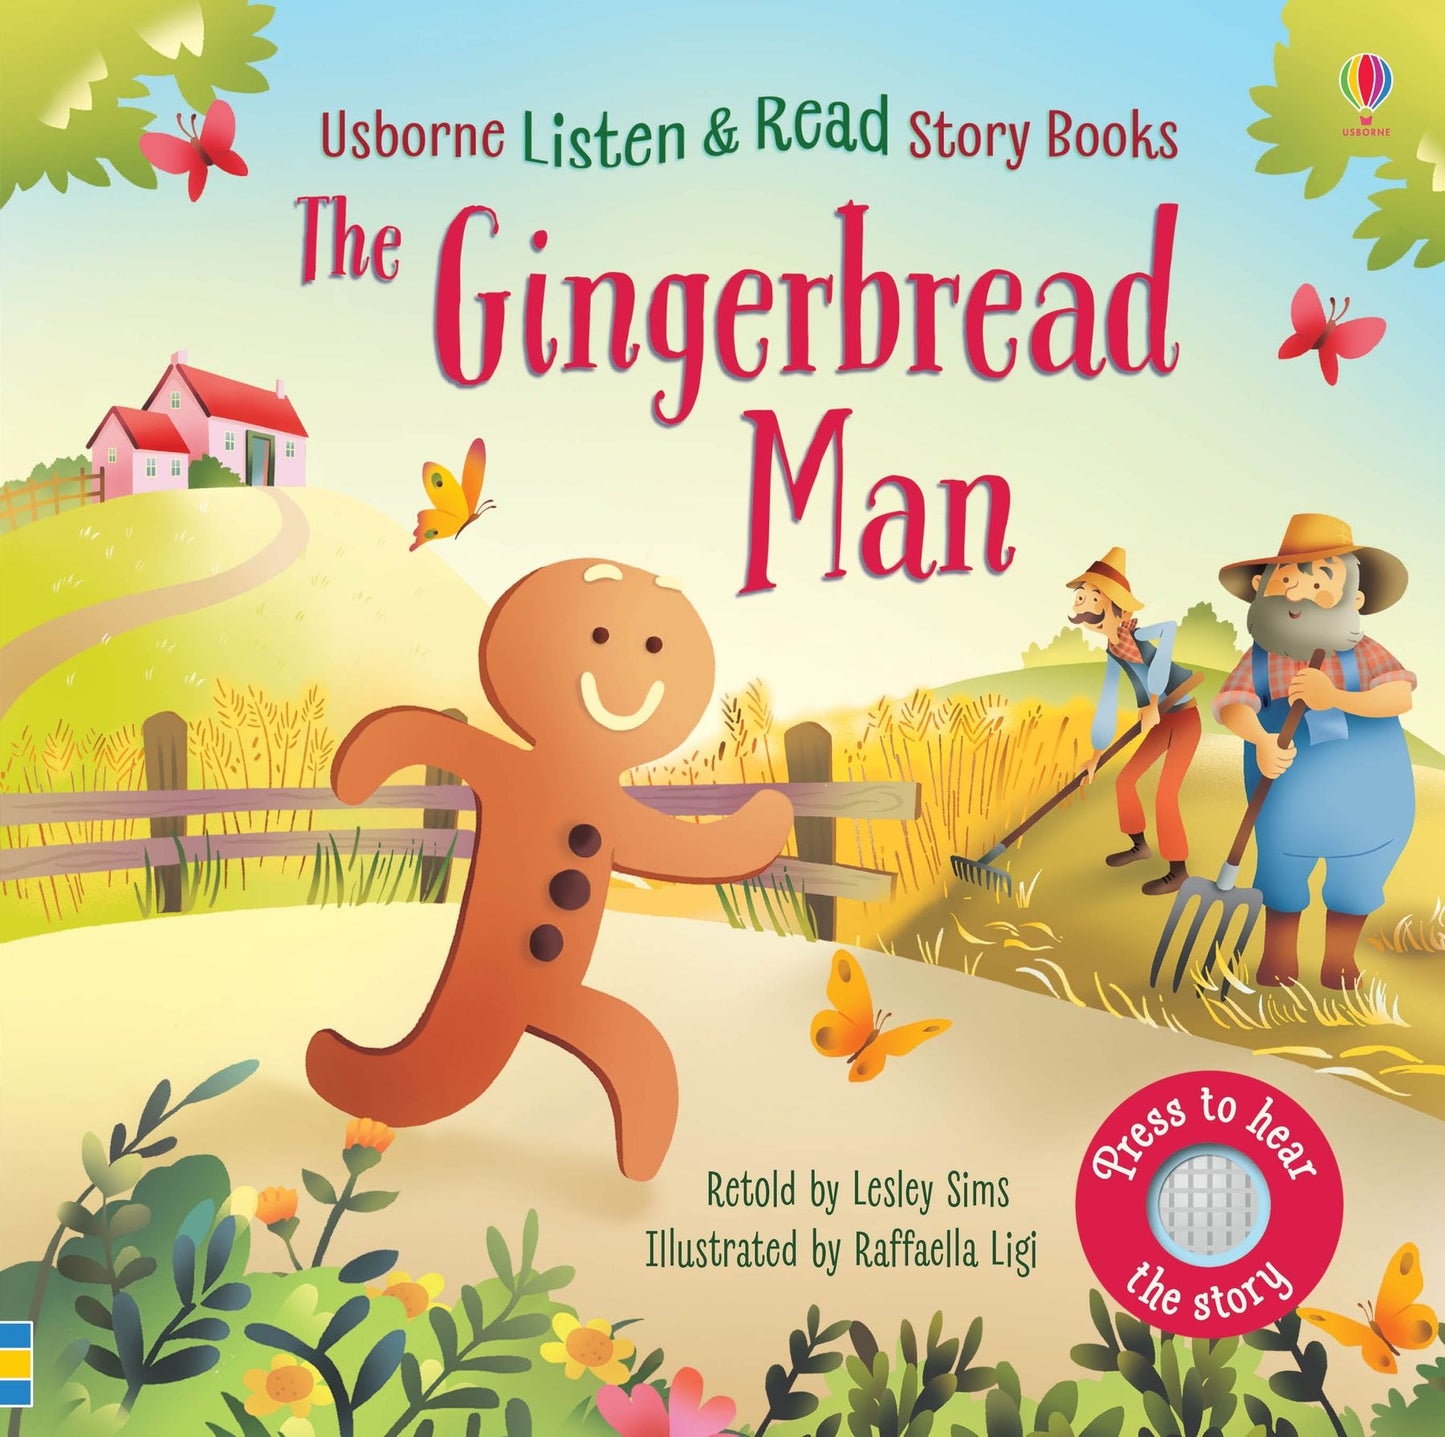 Usborne Listen & Read Story Books - The Gingerbread Man